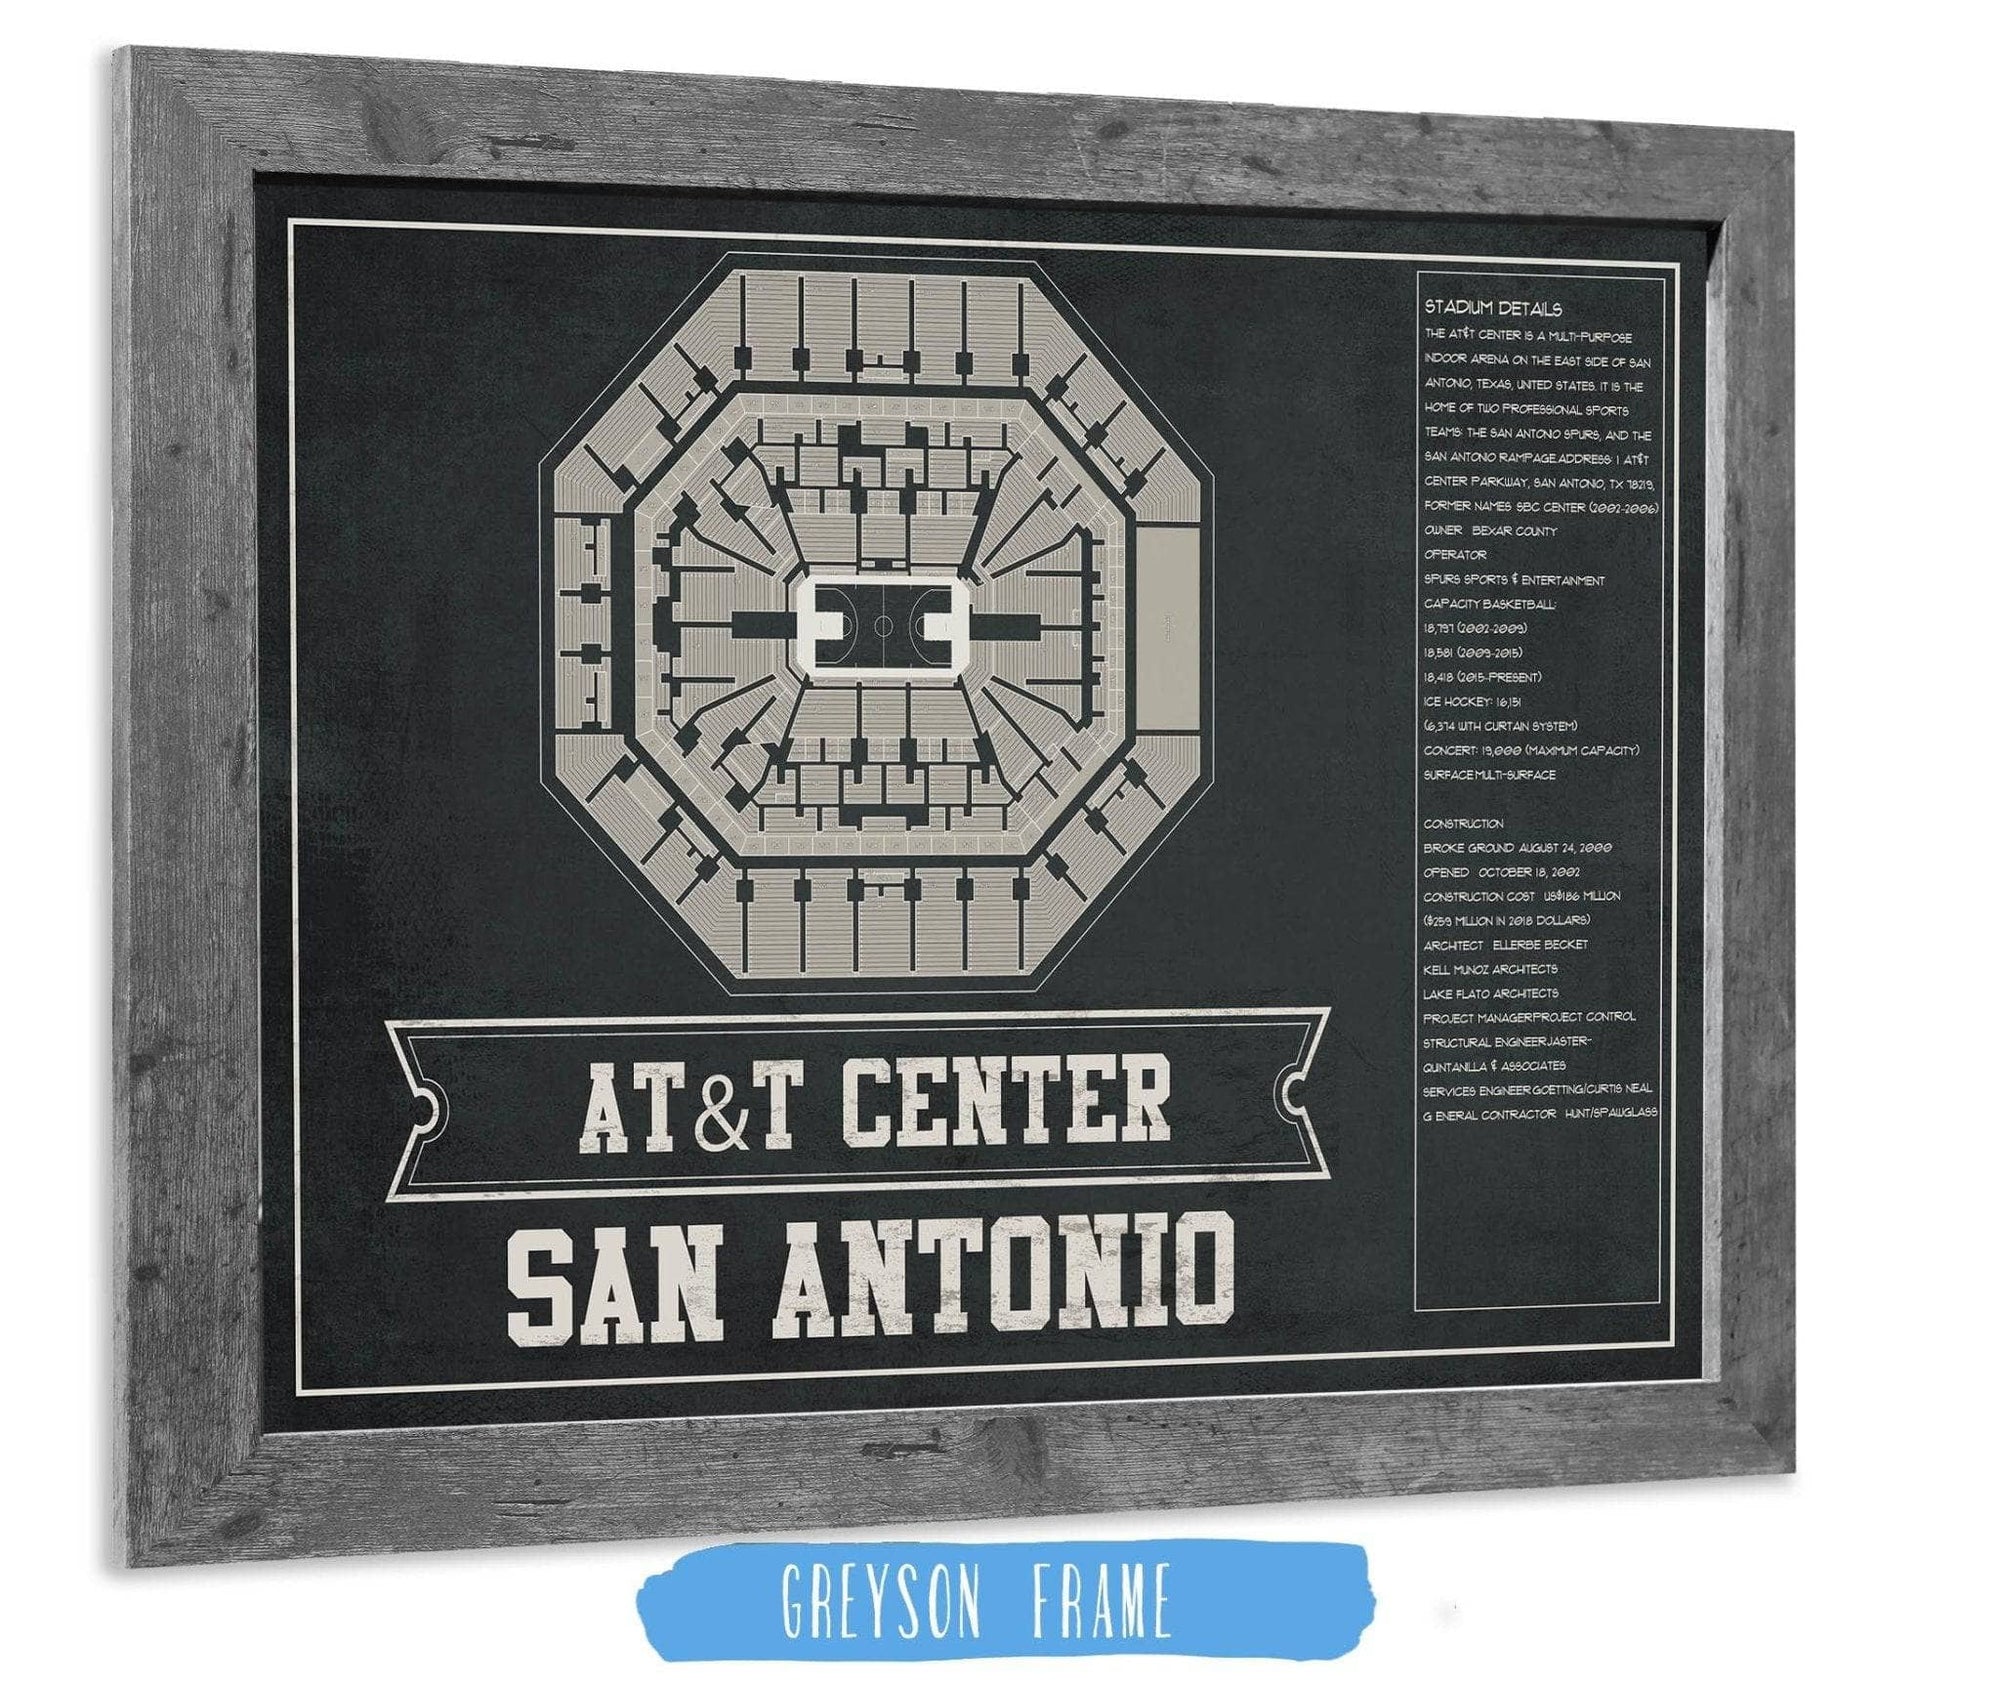 Cutler West Basketball Collection 14" x 11" / Greyson Frame San Antonio Spurs - AT&T Center Vintage Basketball Blueprint NBA Team Color Print 661242166-TEAM_77560